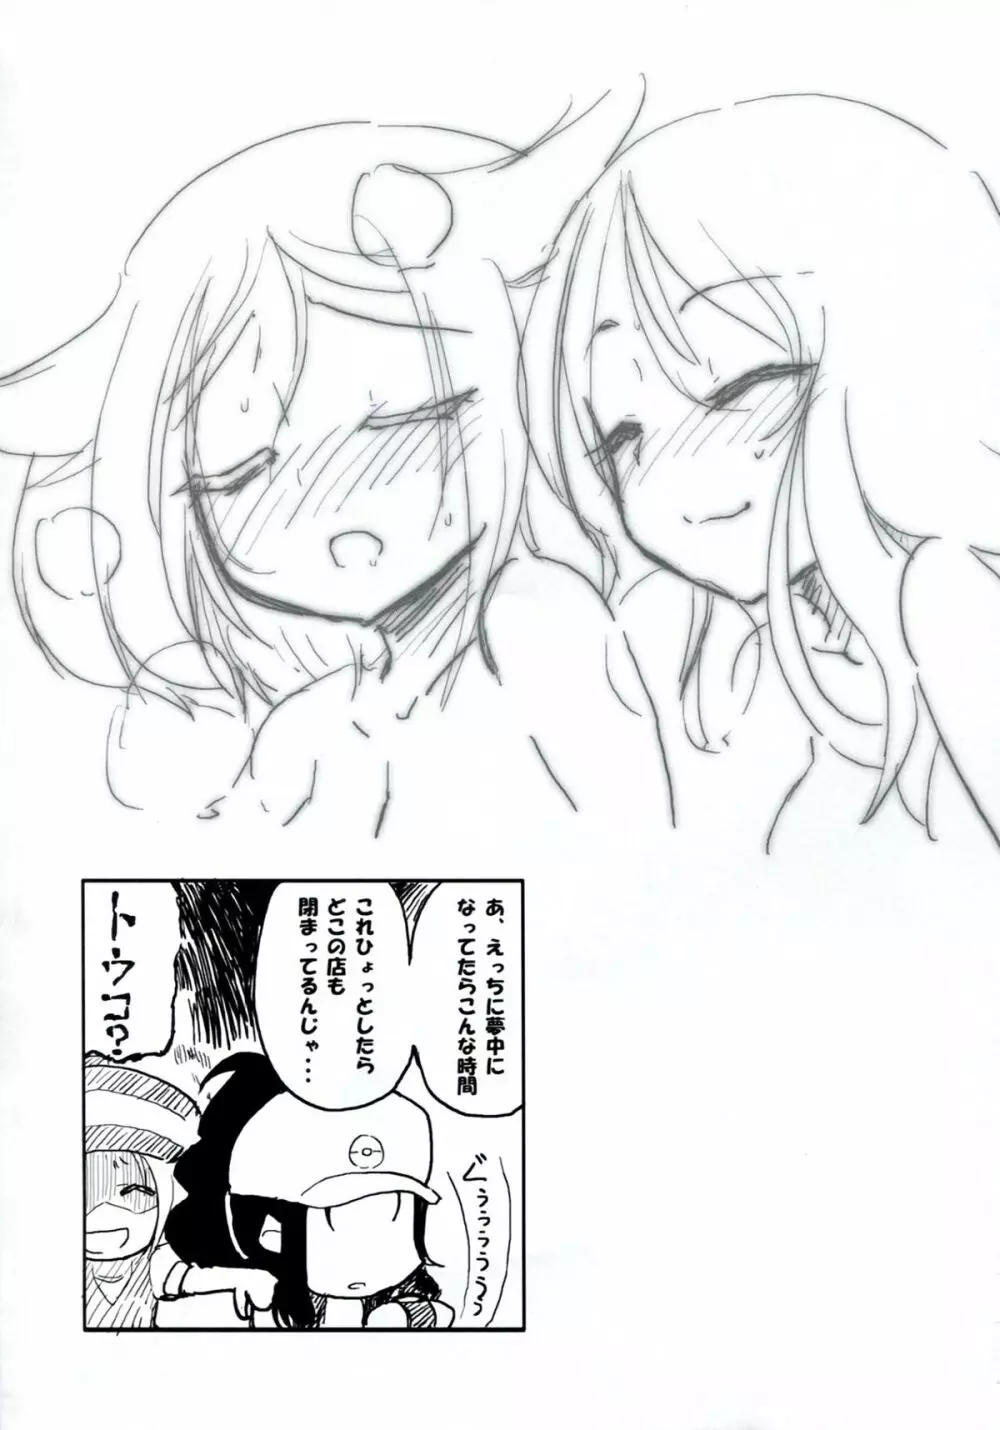 Homuraya Milk ★ Collection 2 - page39